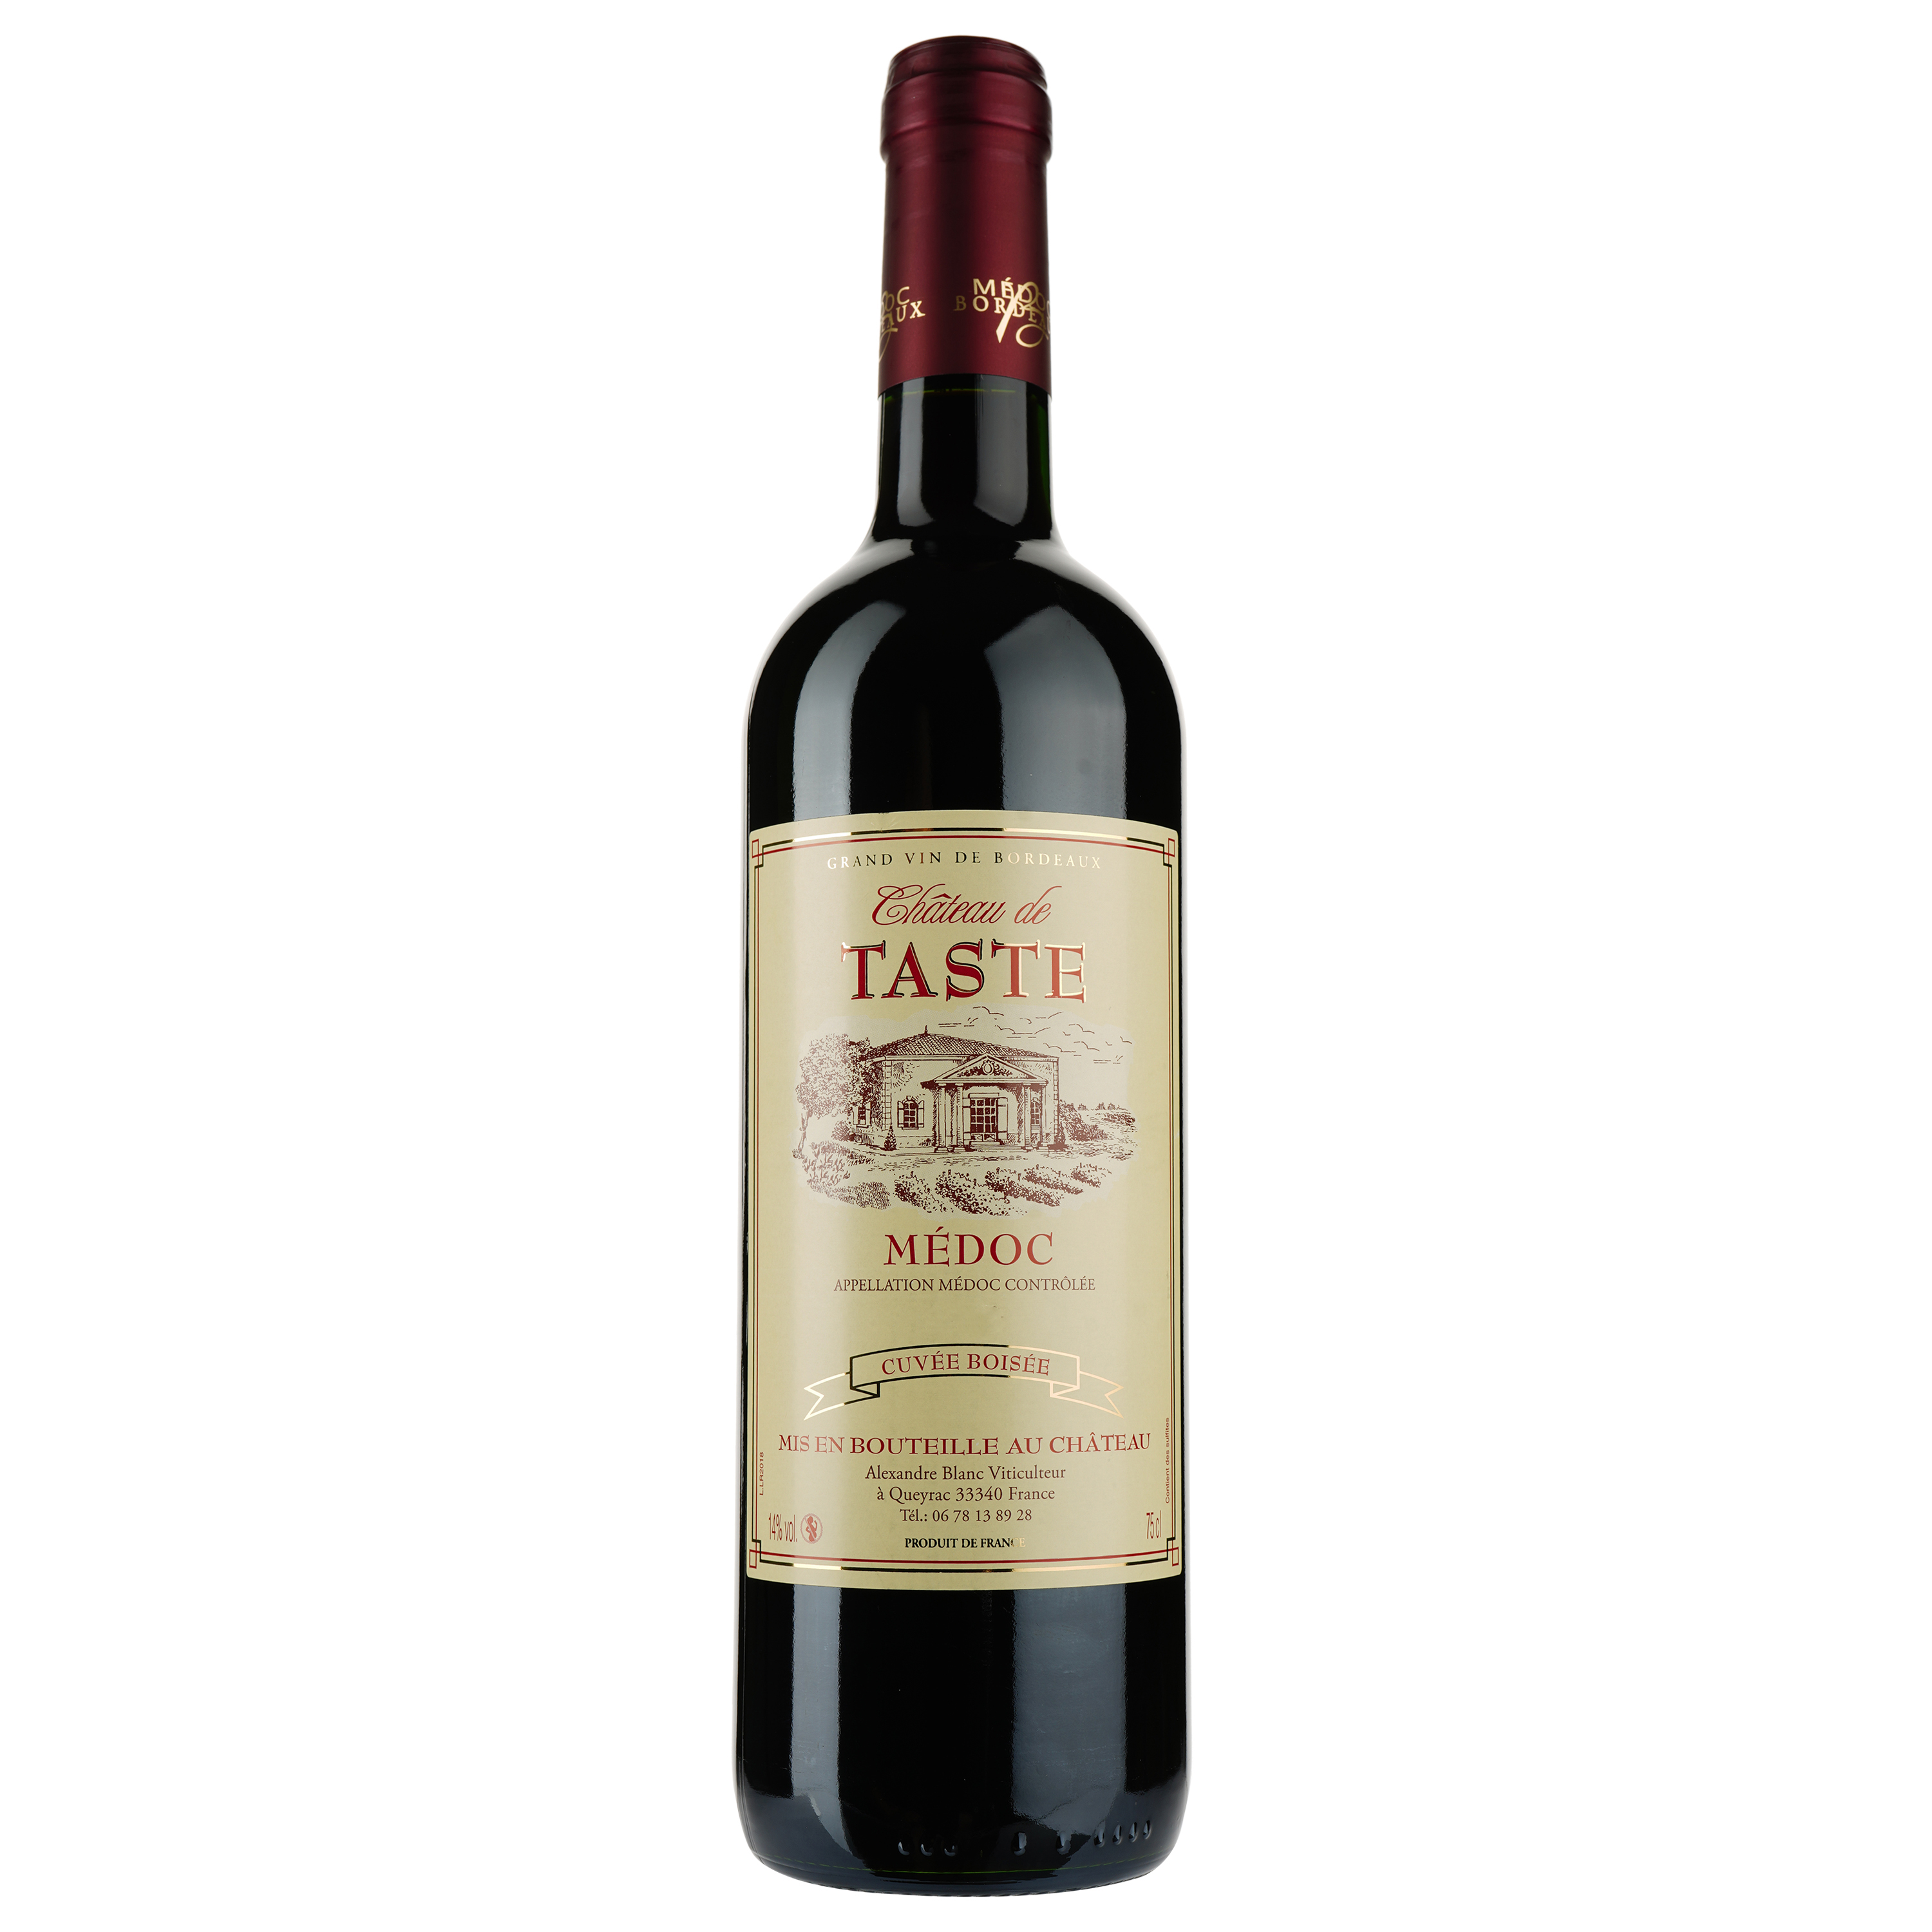 Вино Chateau de Taste AOP Medoc 2018, червоне, сухе, 0,75 л - фото 1